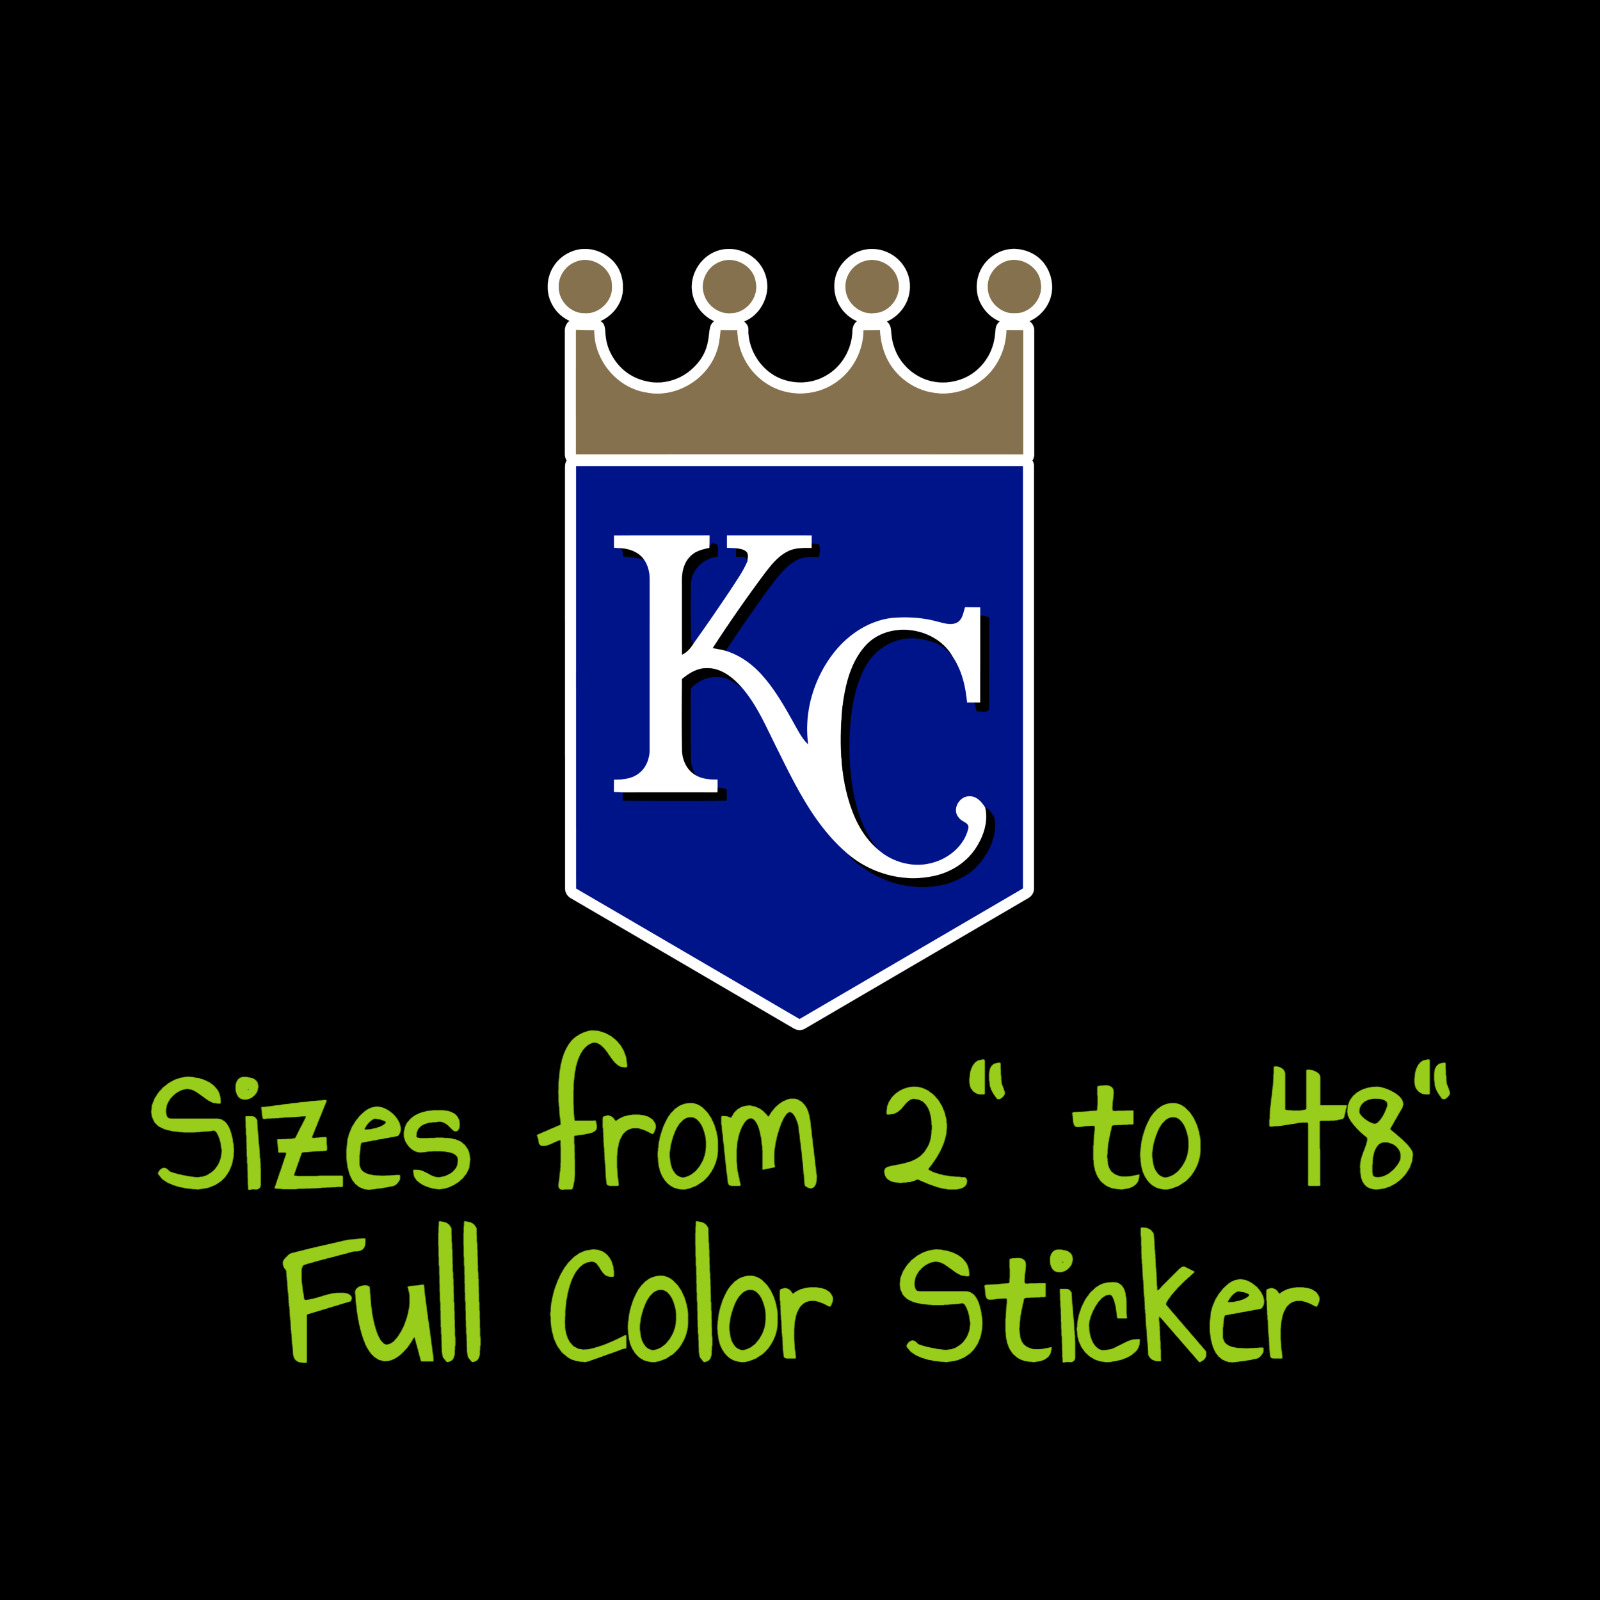 Kansas City Royals Full Color Vinyl Decal | Hydroflask decal | Cornhole decal 6